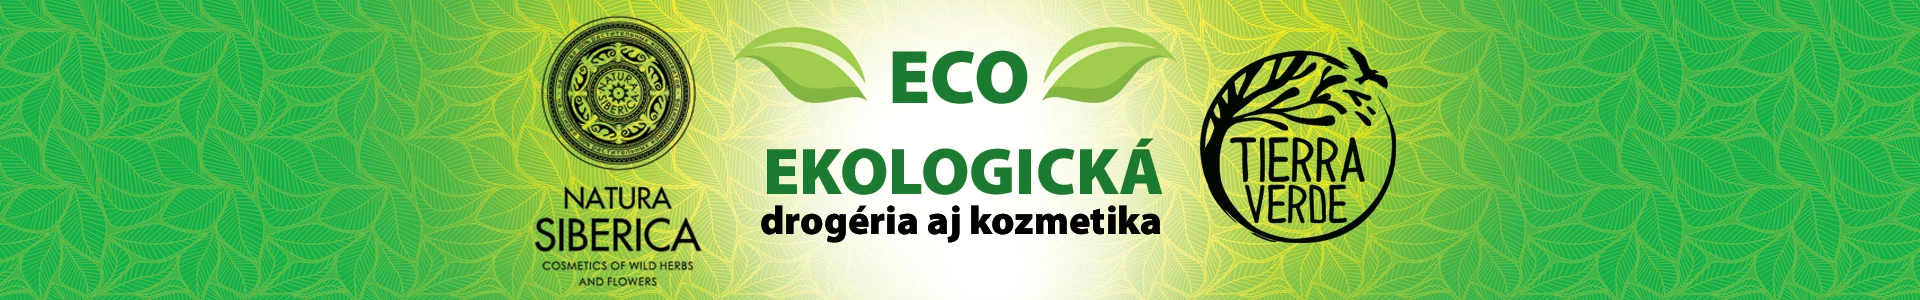 banner eco